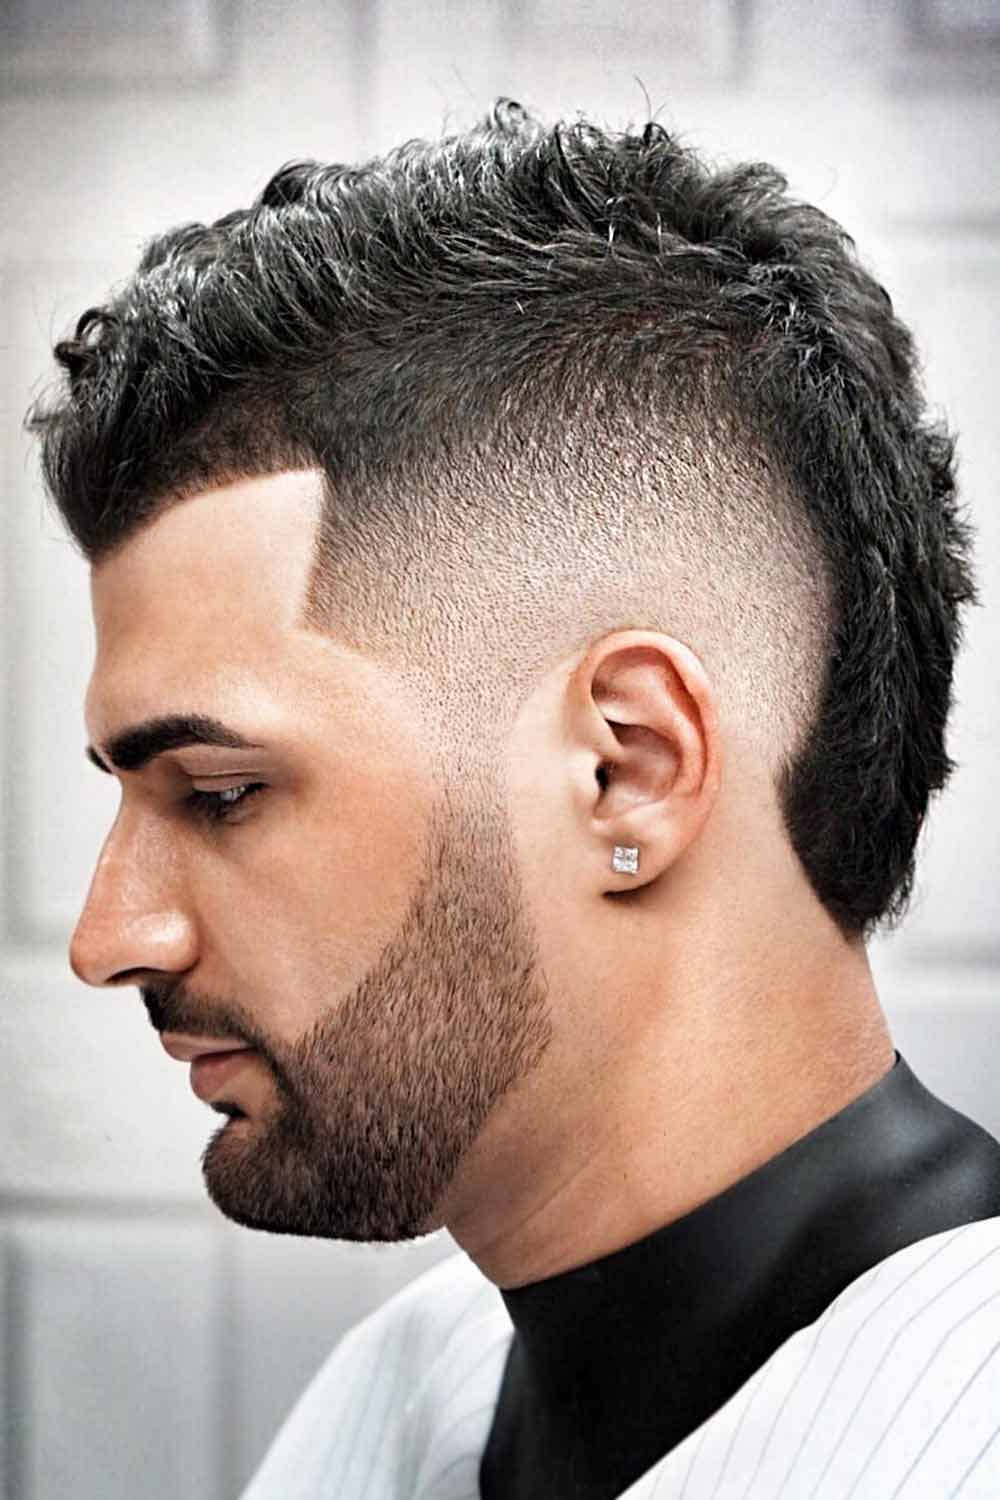 Mohawk Haircut #typesofhaircutsmen #typesofhaircuts #haircutsmen #hairstylesmen